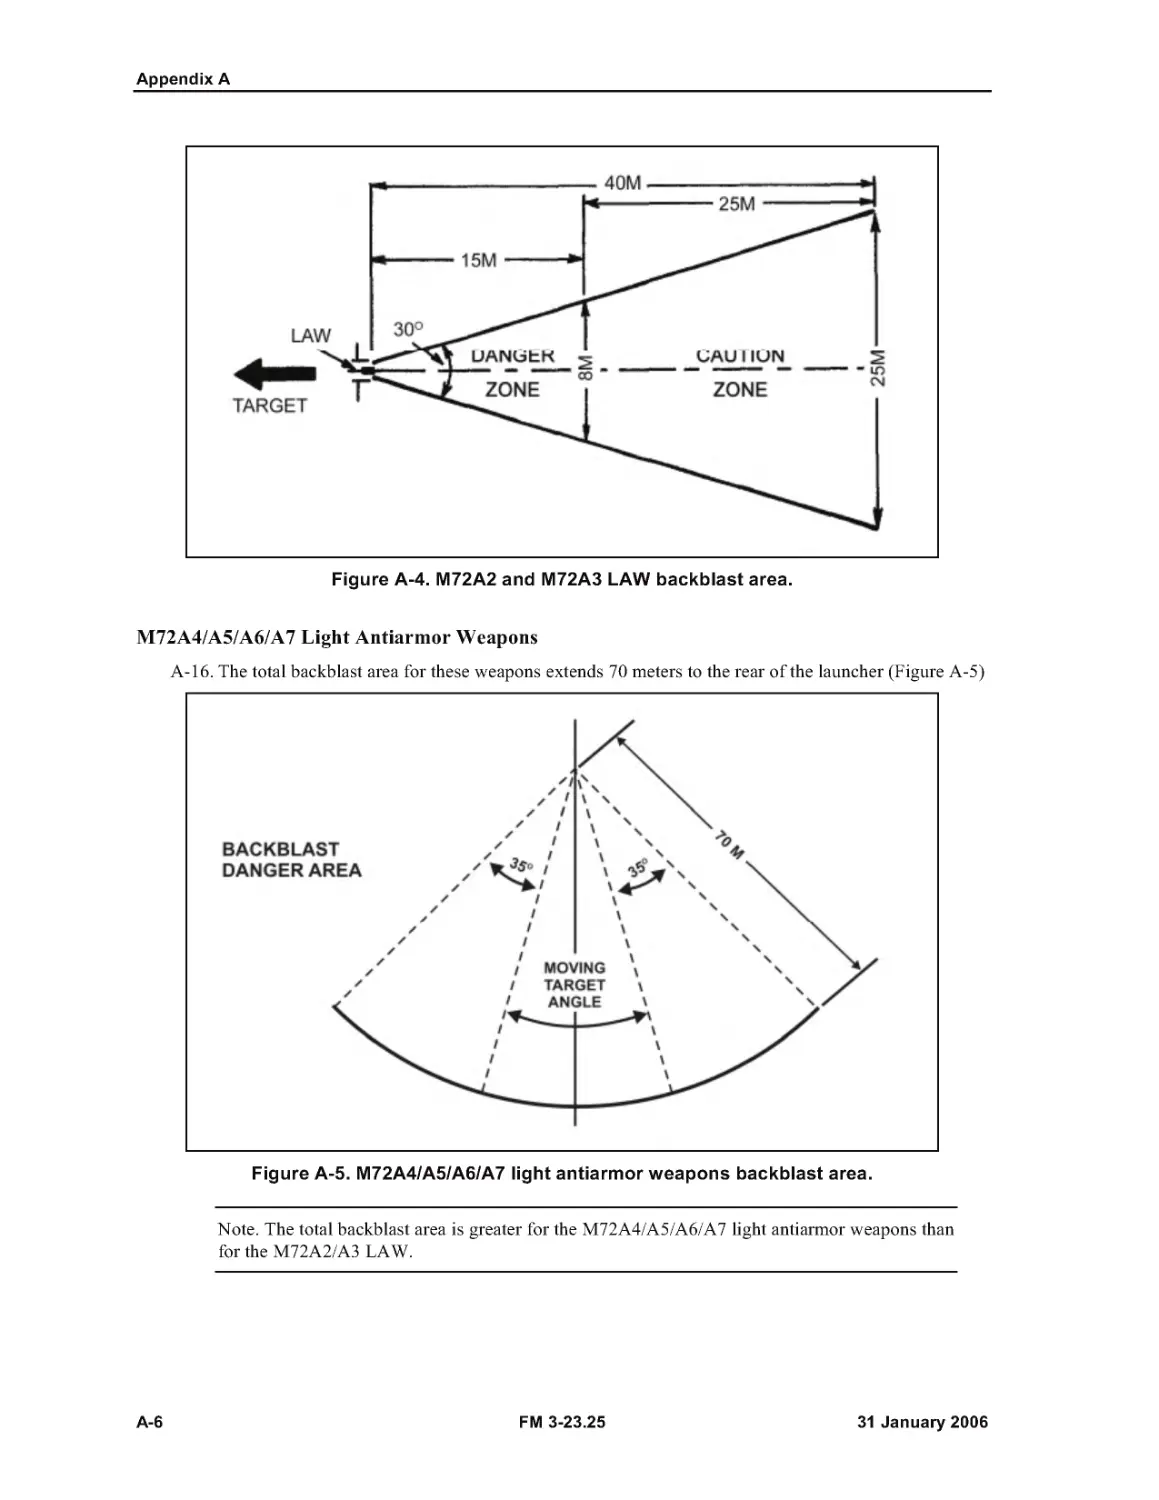 Figure A-4. M72A2 and M72A3 LAW backblast area.
Figure A-5. M72A4/A5/A6/A7 light antiarmor weapons backblast area.